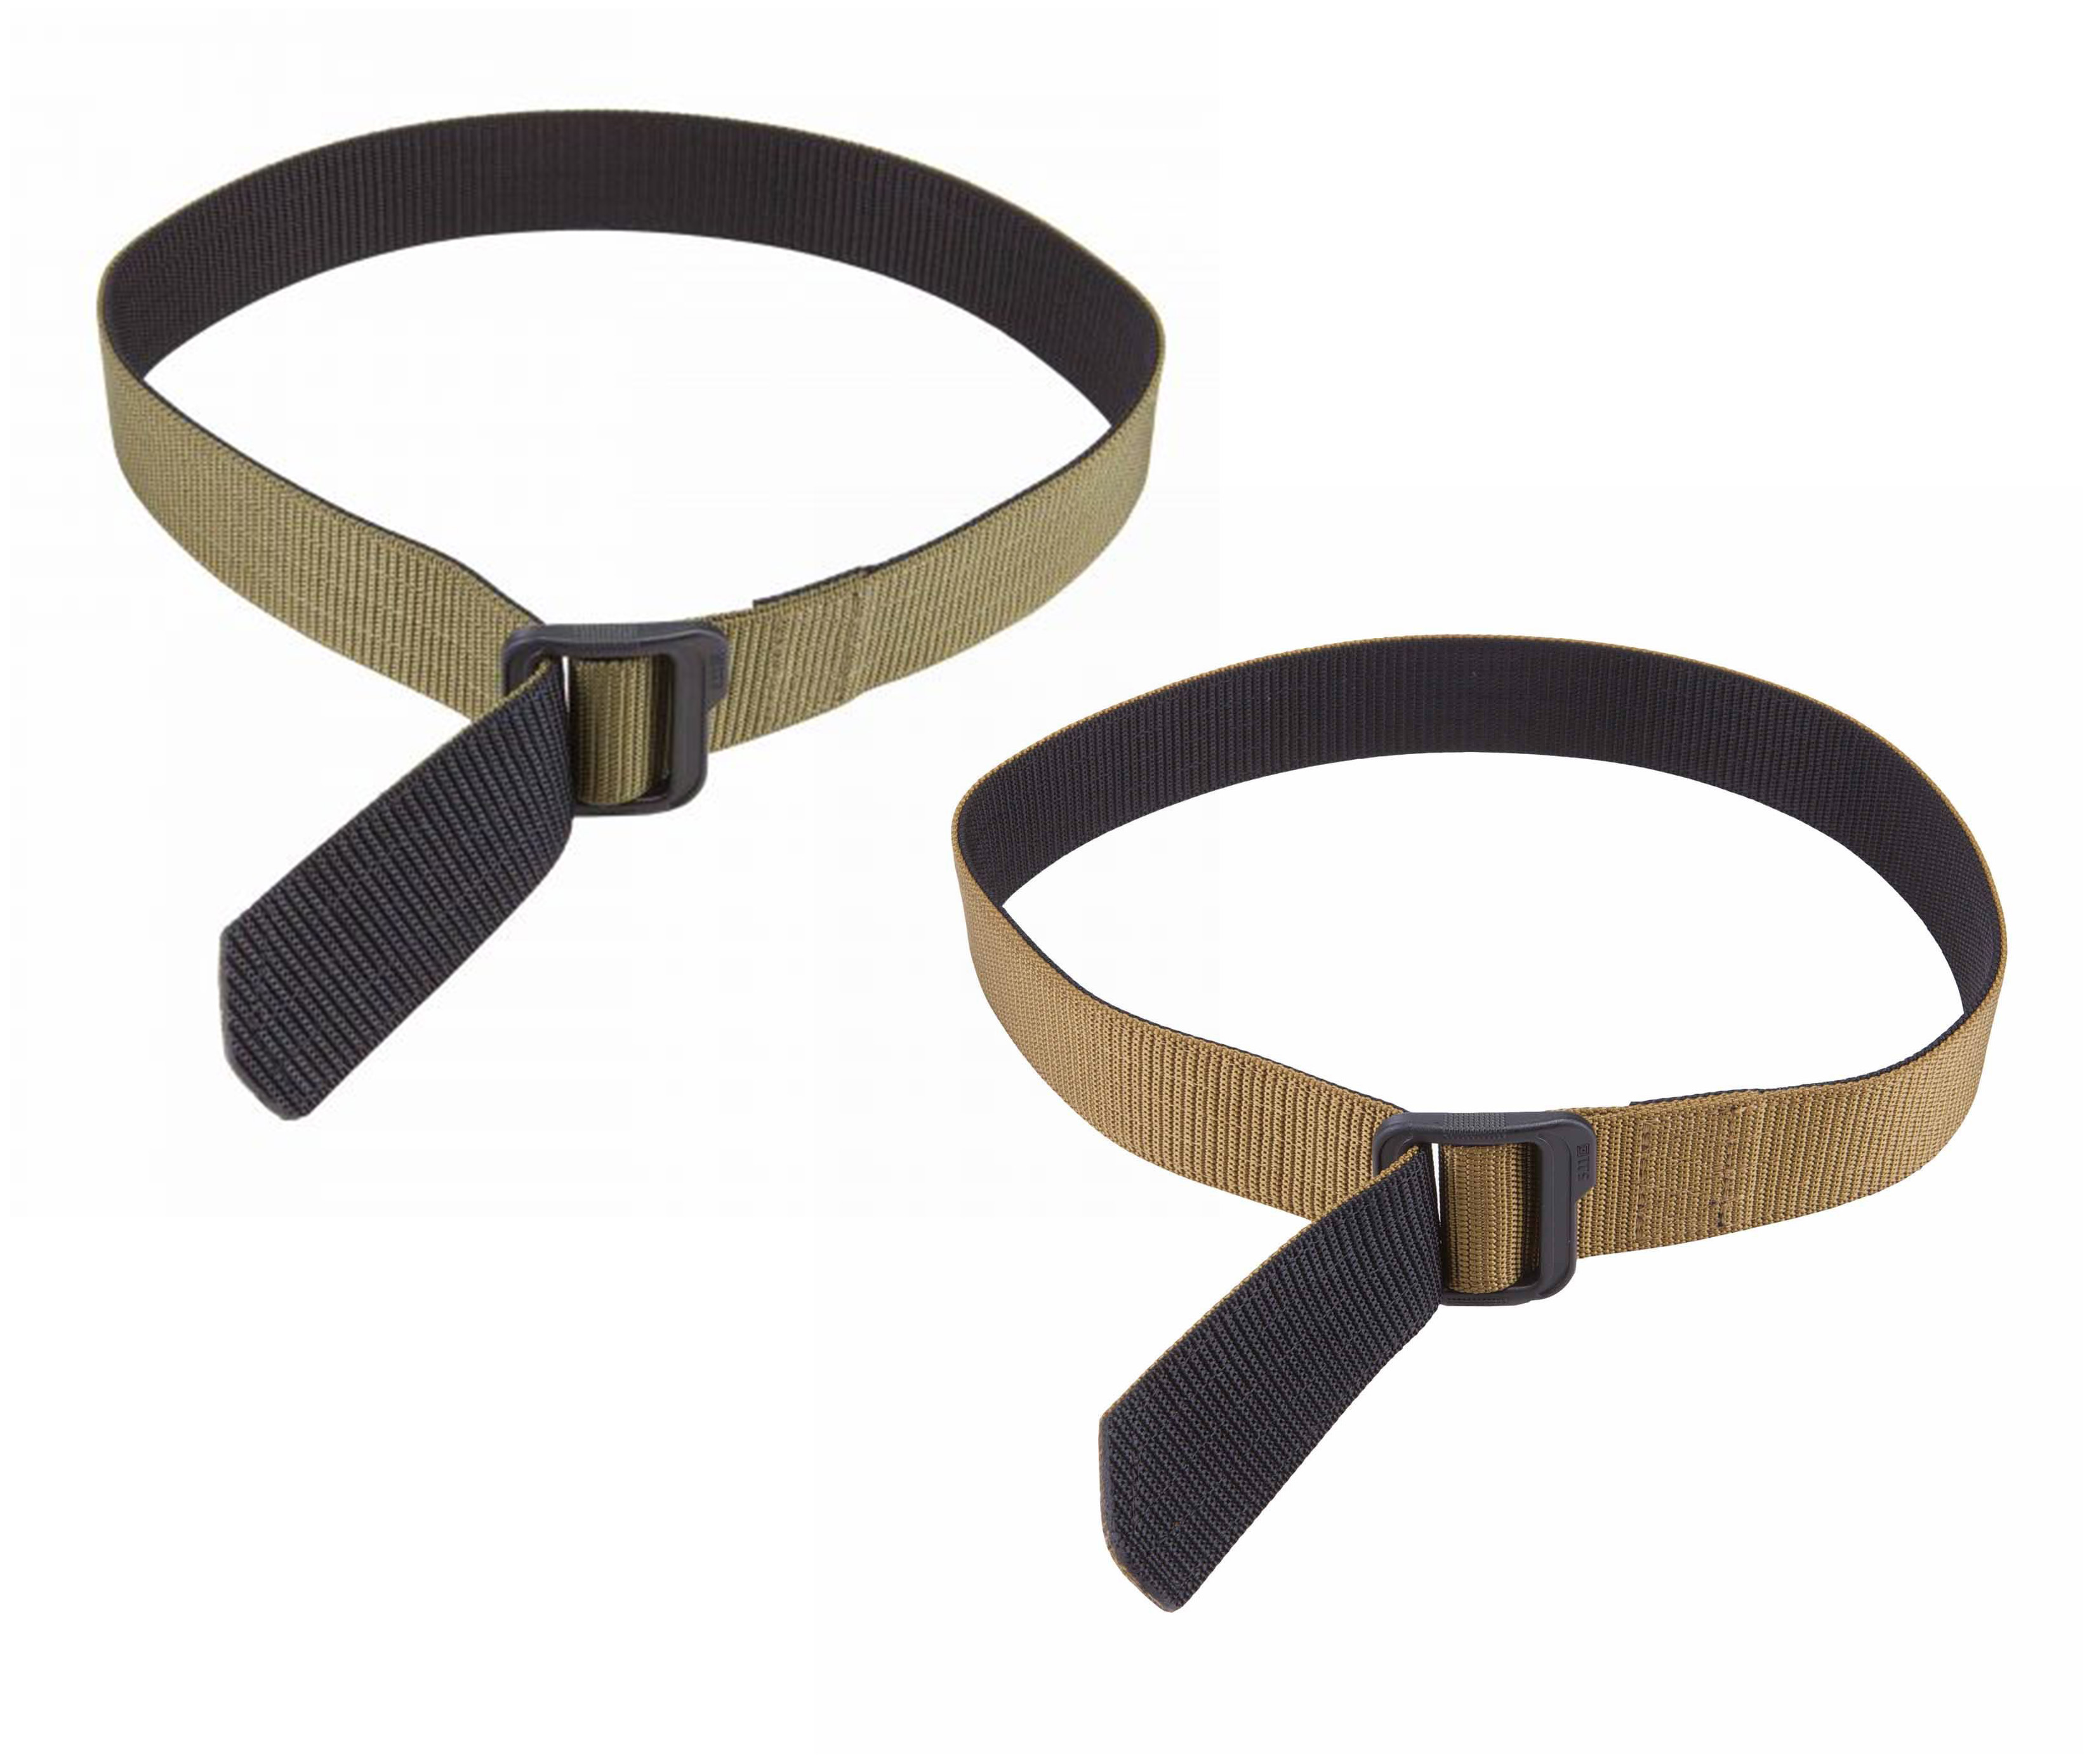 5.11 Tactical Double Duty Reversible Belt 1.75" Men's XL TDU Green & Black 59567 